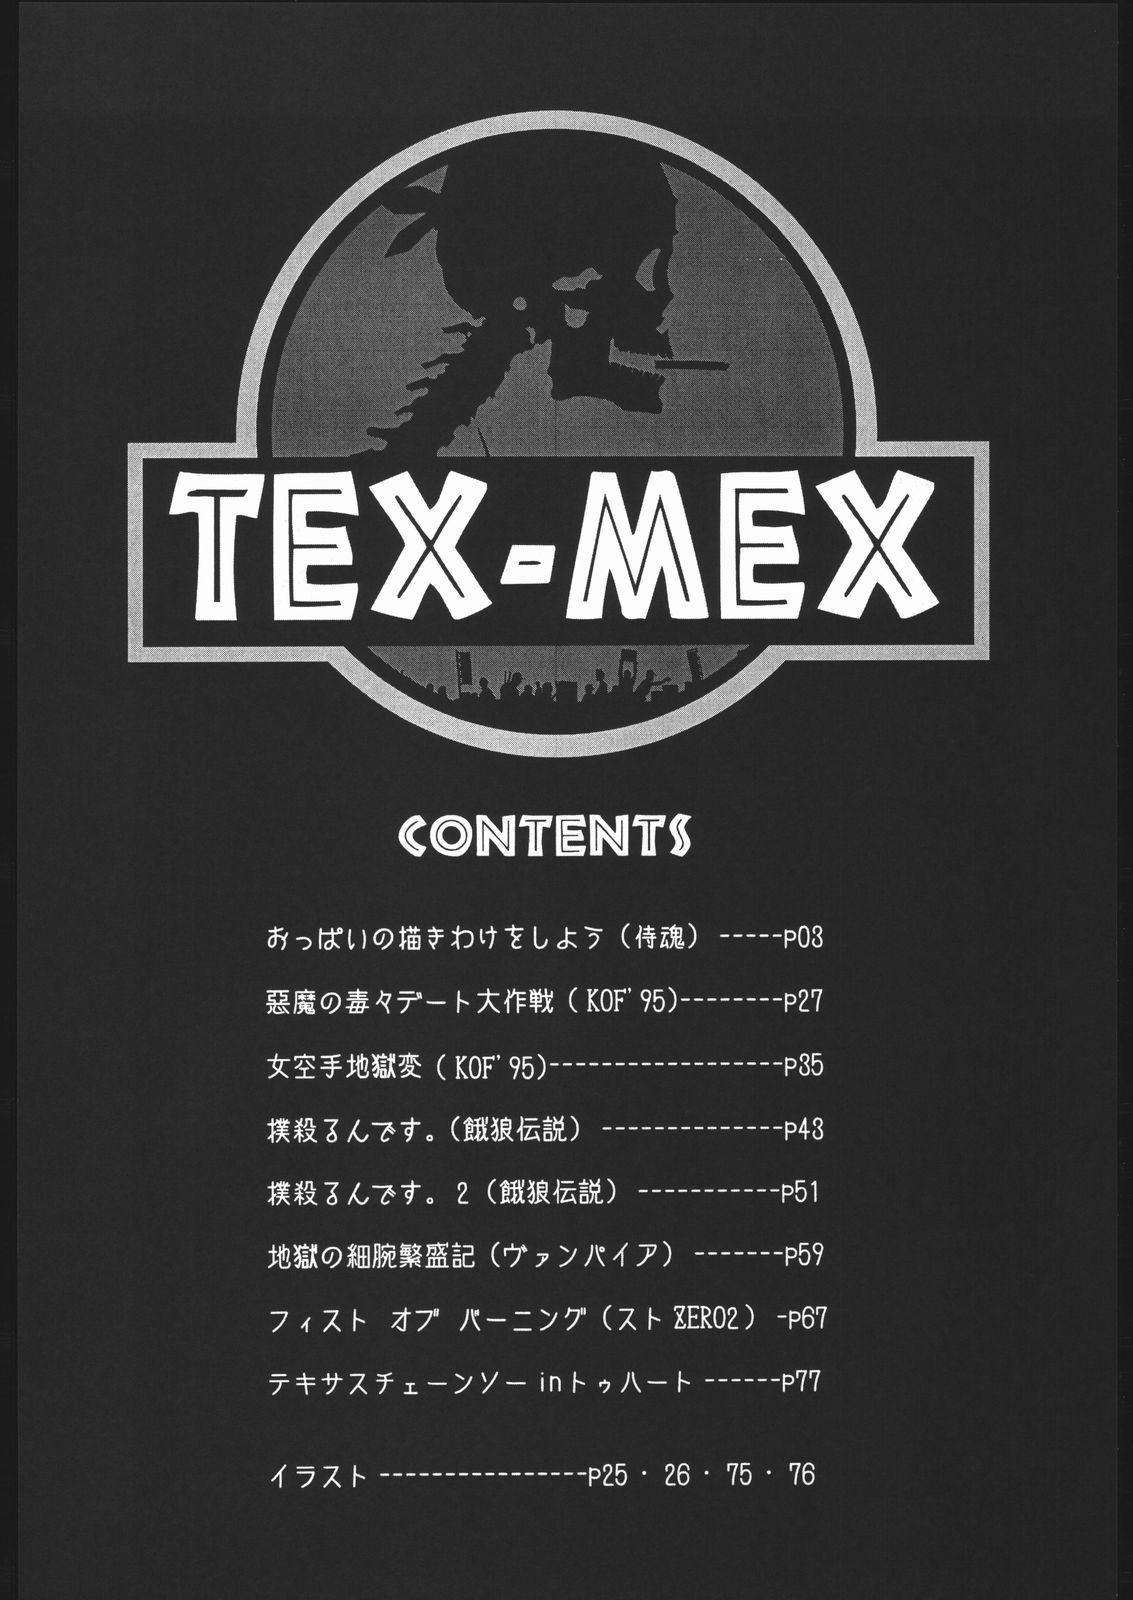 WAY OF TEX-MEX 2